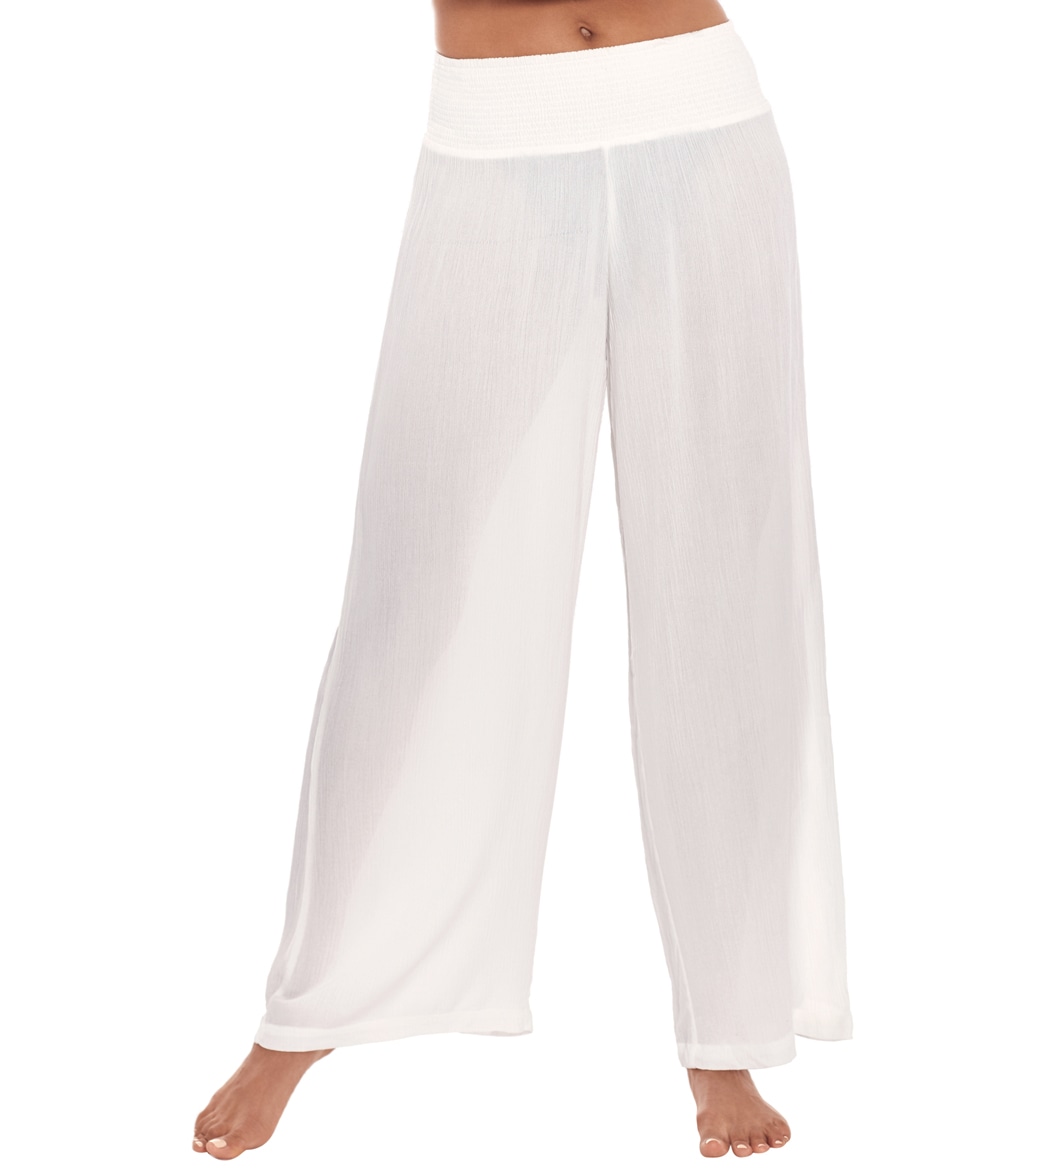 Ralph Lauren Lauren Women's Crinkle Rayon Cover Up Pants - White Large - Swimoutlet.com